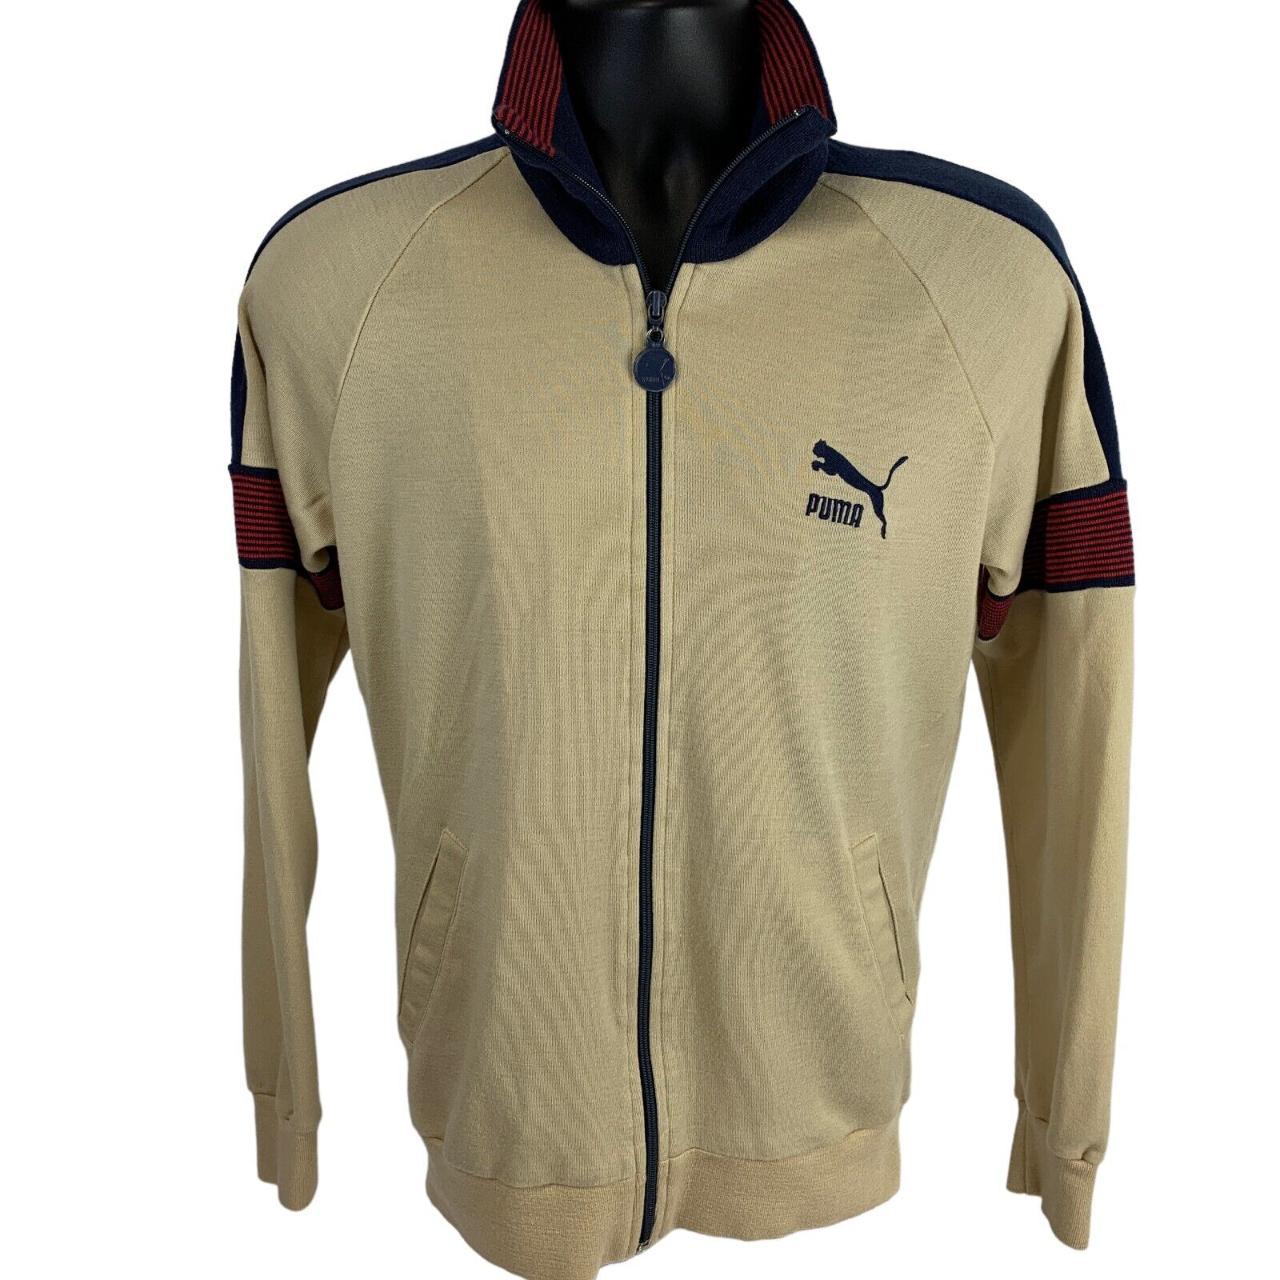 Vintage 80s 90s Puma Shirt Jacket Track Tennis Full... - Depop